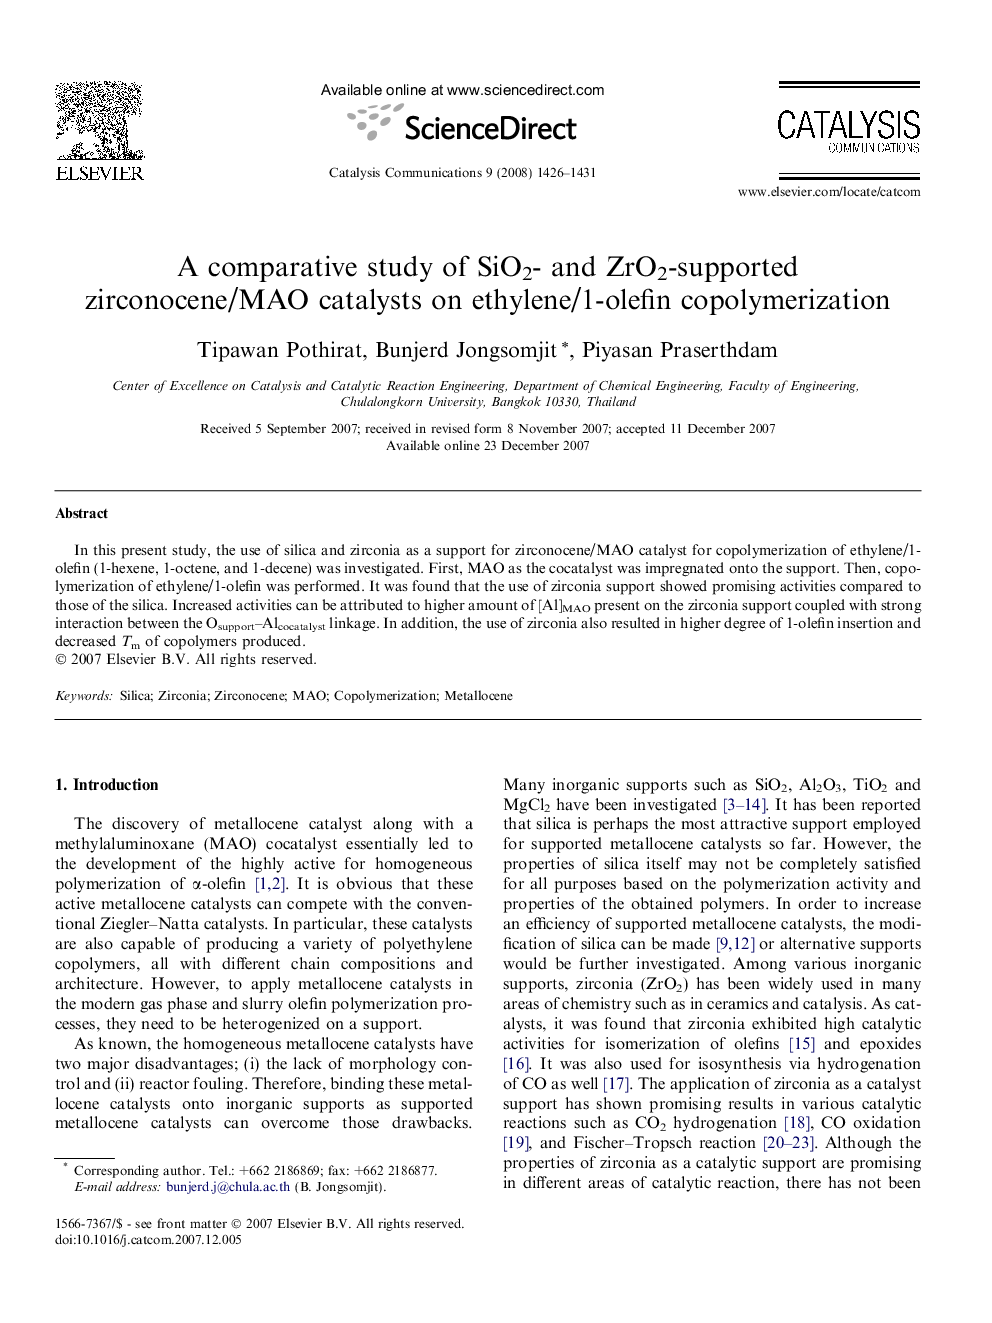 A comparative study of SiO2- and ZrO2-supported zirconocene/MAO catalysts on ethylene/1-olefin copolymerization